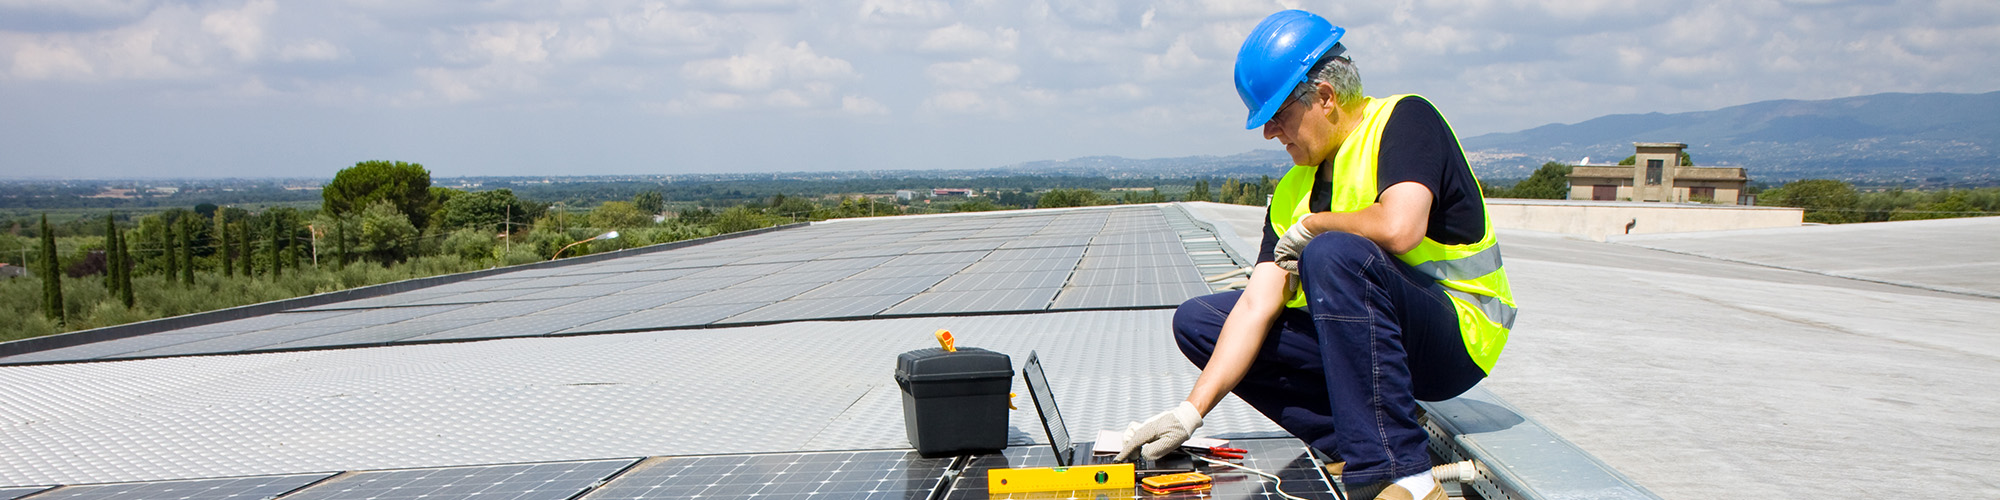 Solar Service and Maintenance